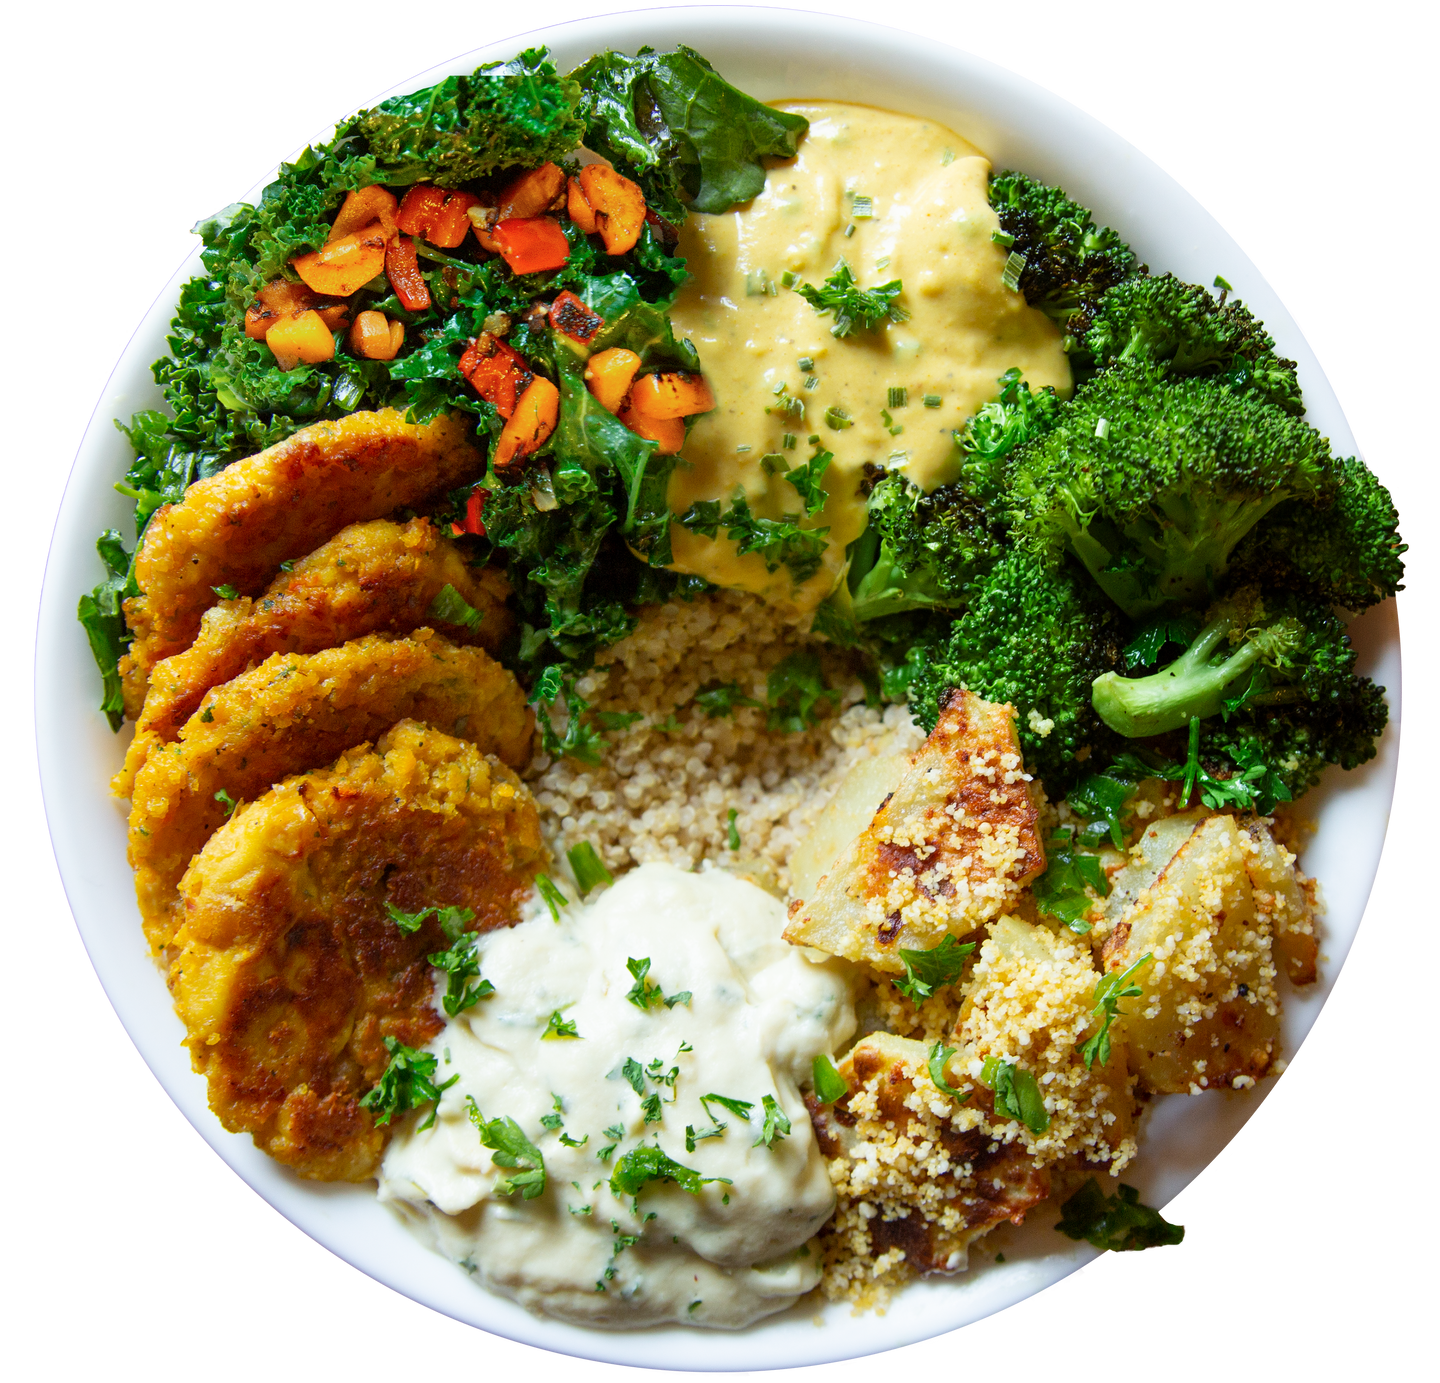 Plant-based, vegan, vegetarian Cheesy Broccoli Bowl meal prep in Des Moines, Iowa